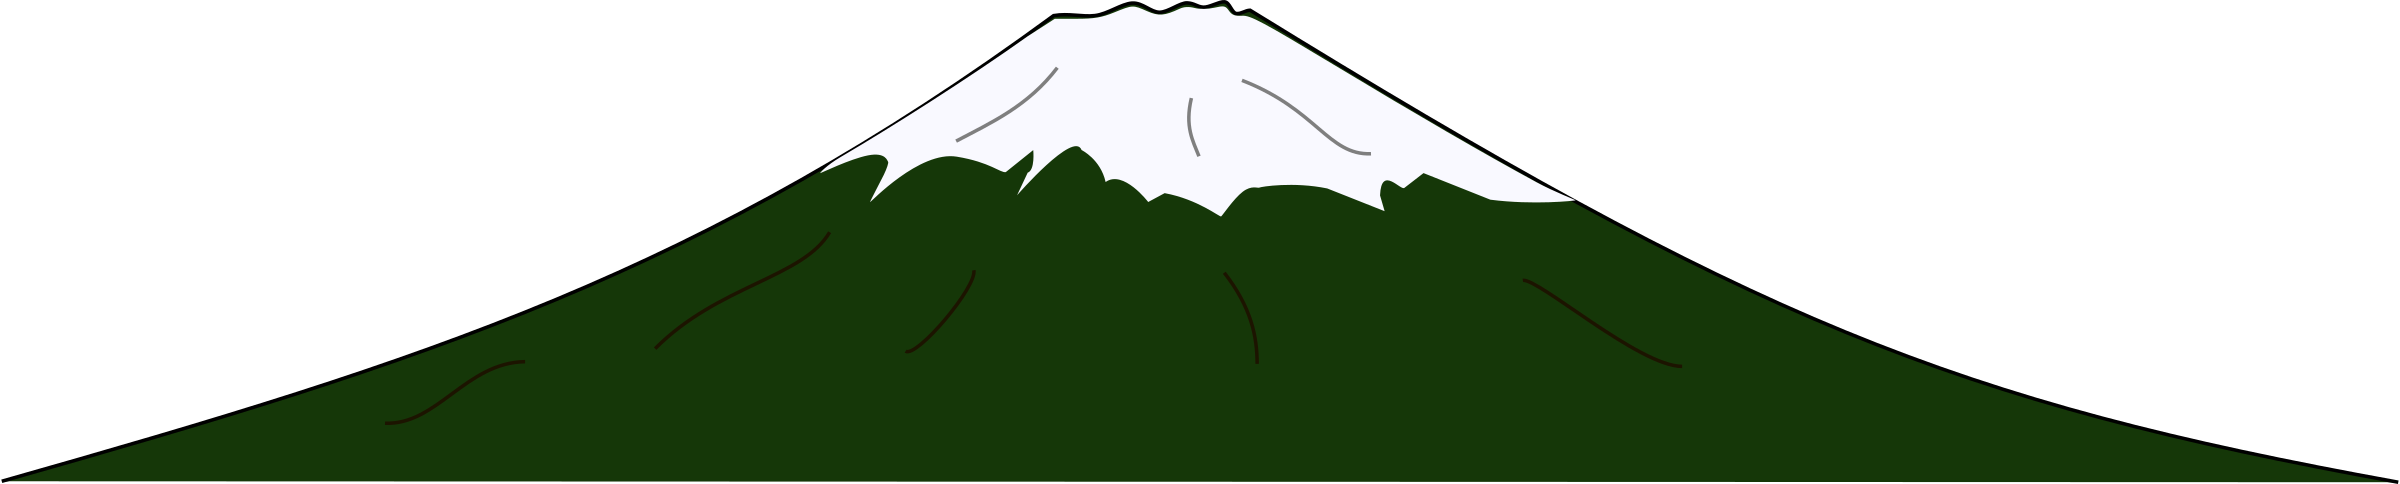 clipart mountain animation